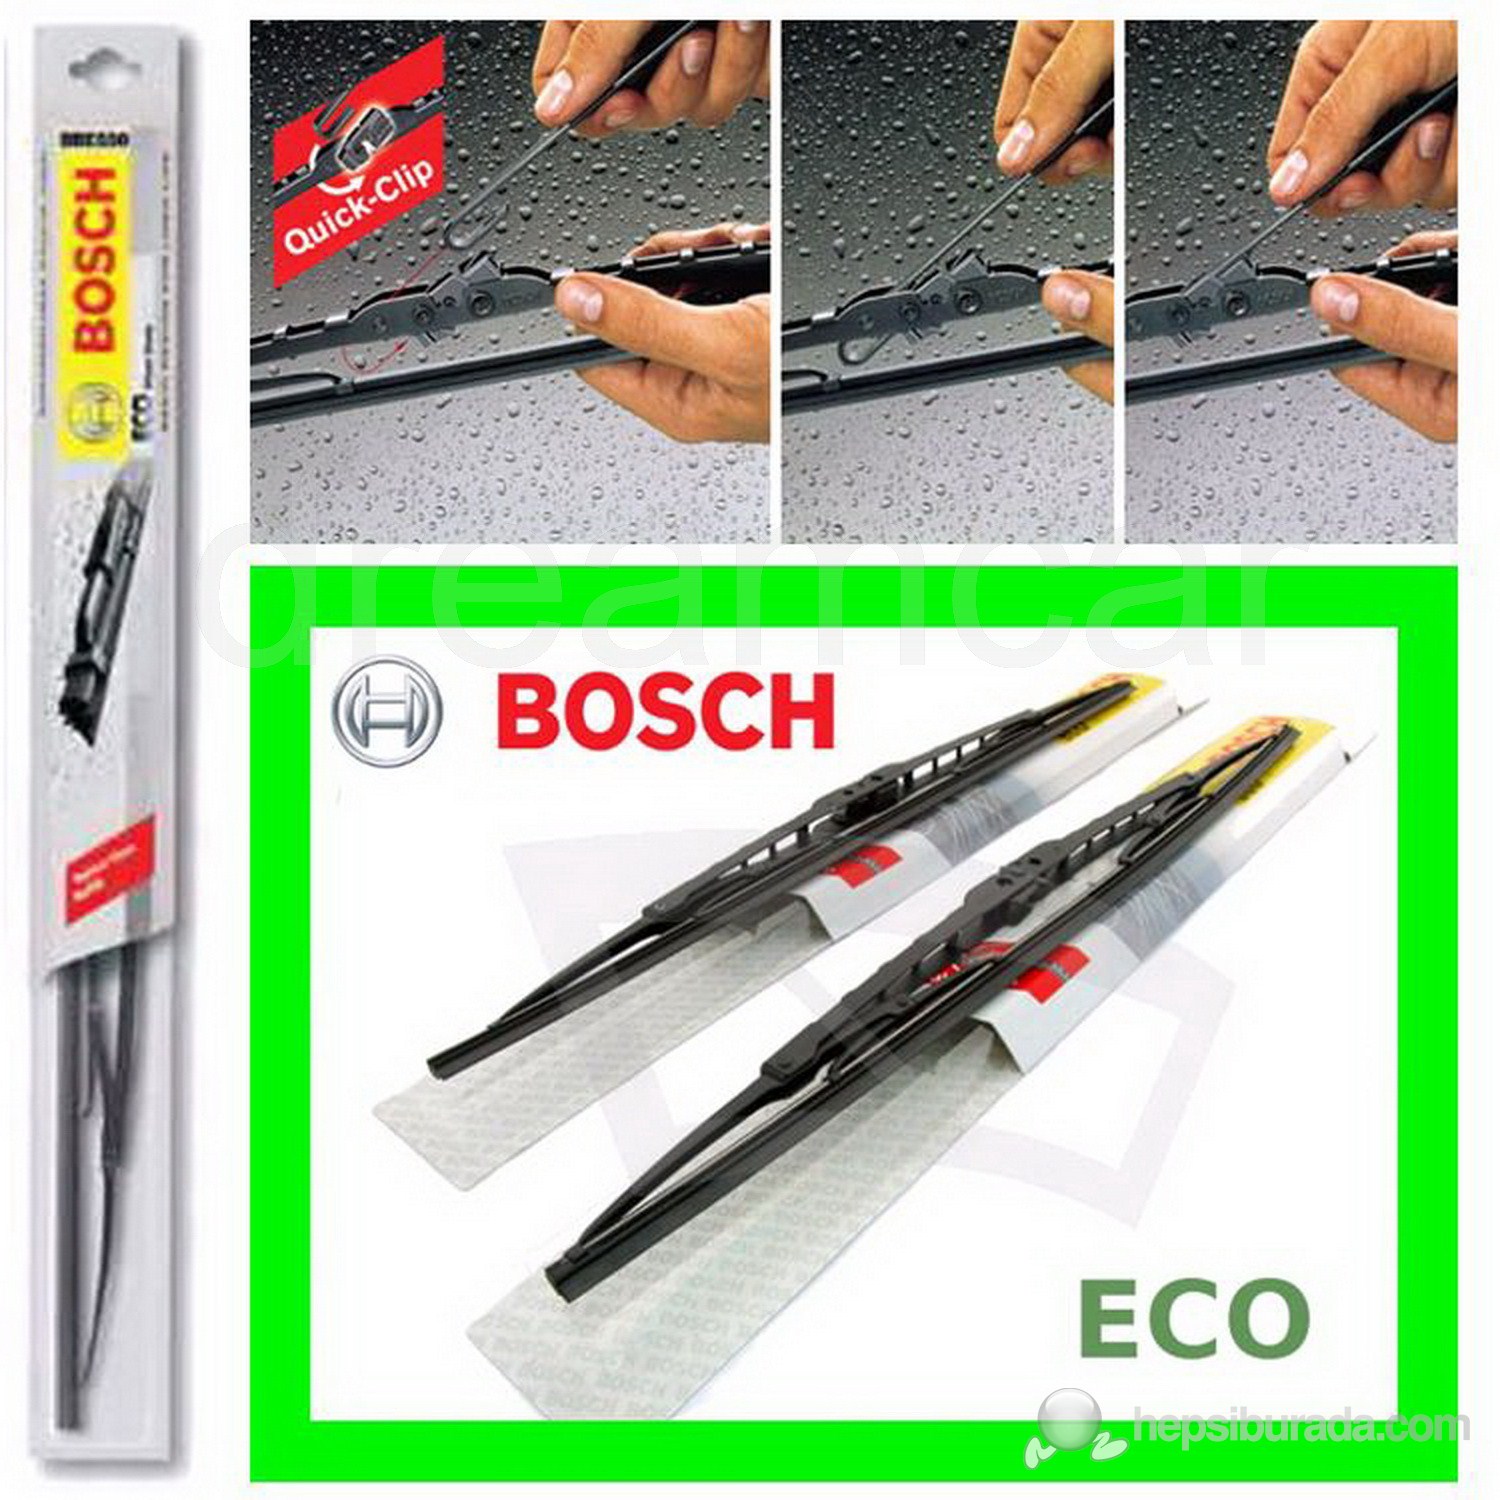 Bosch Eco Universal Quick-Clip Telli Grafitili Silecek 65 Cm. 1 Adet 3397011402